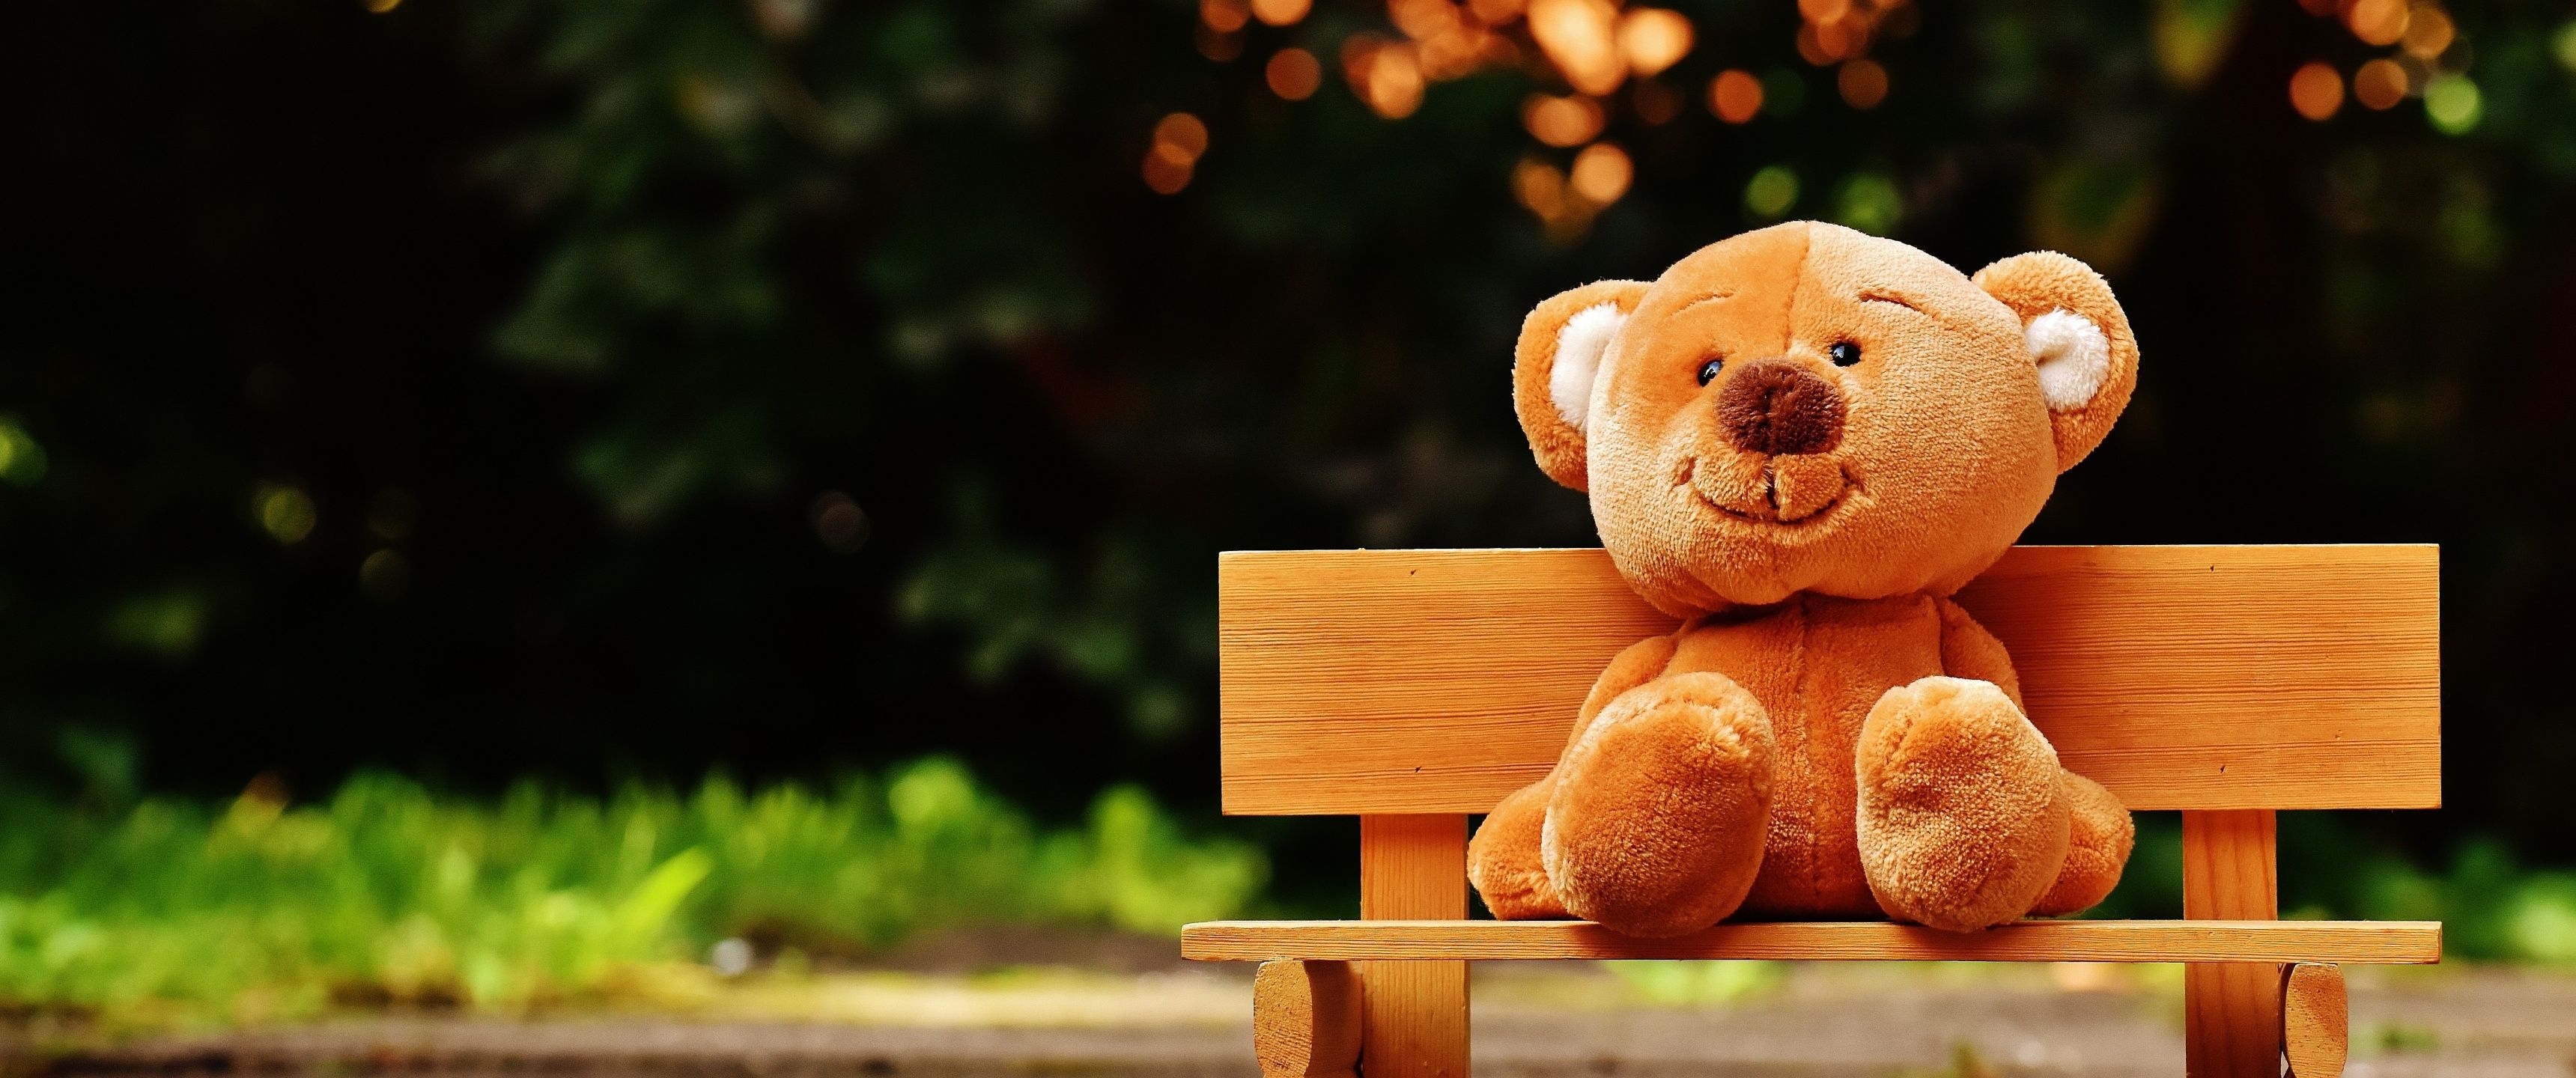 Teddy bear Wallpaper 4K, Park bench, Soft toy, Cute